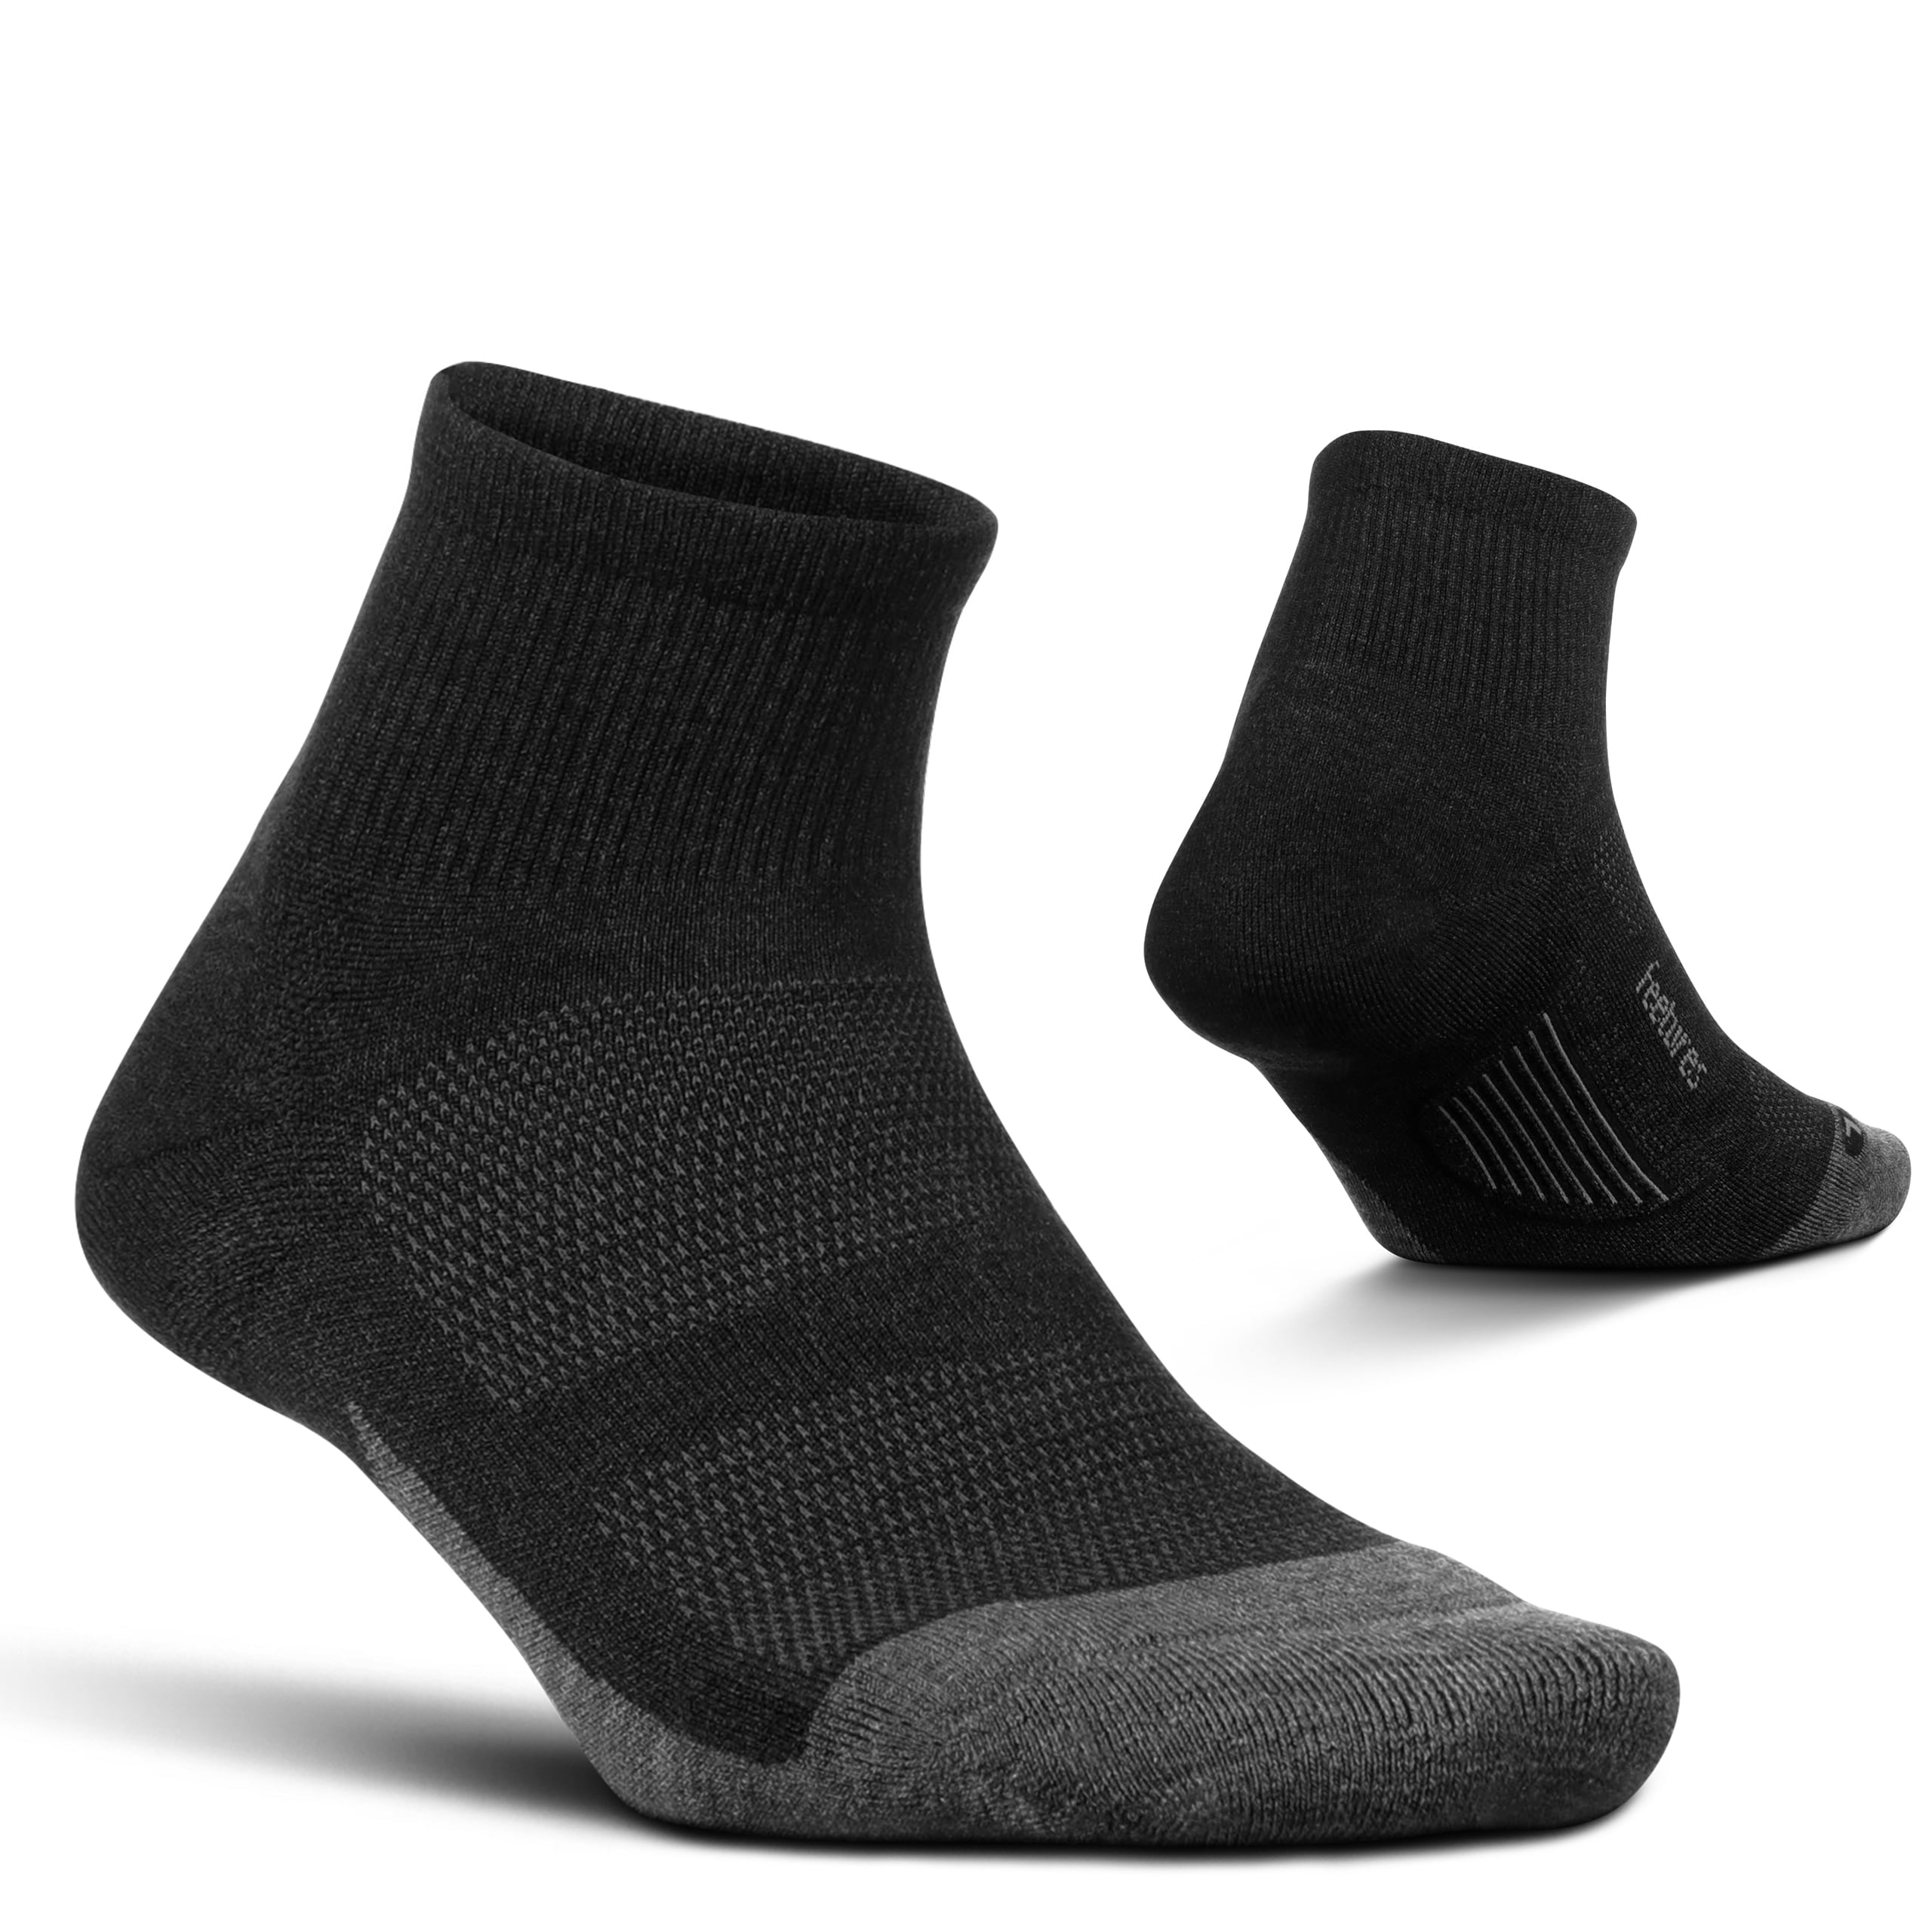 2 Pair Moisturizing Gel Socks, Ultra-Soft Gel Socks Moisturizing Socks, Spa  Gel Soften Socks for Dry Cracked Feet Skins, Gel Lining Infused with  Essential Oils and Vitamins (Blue&Pink) 